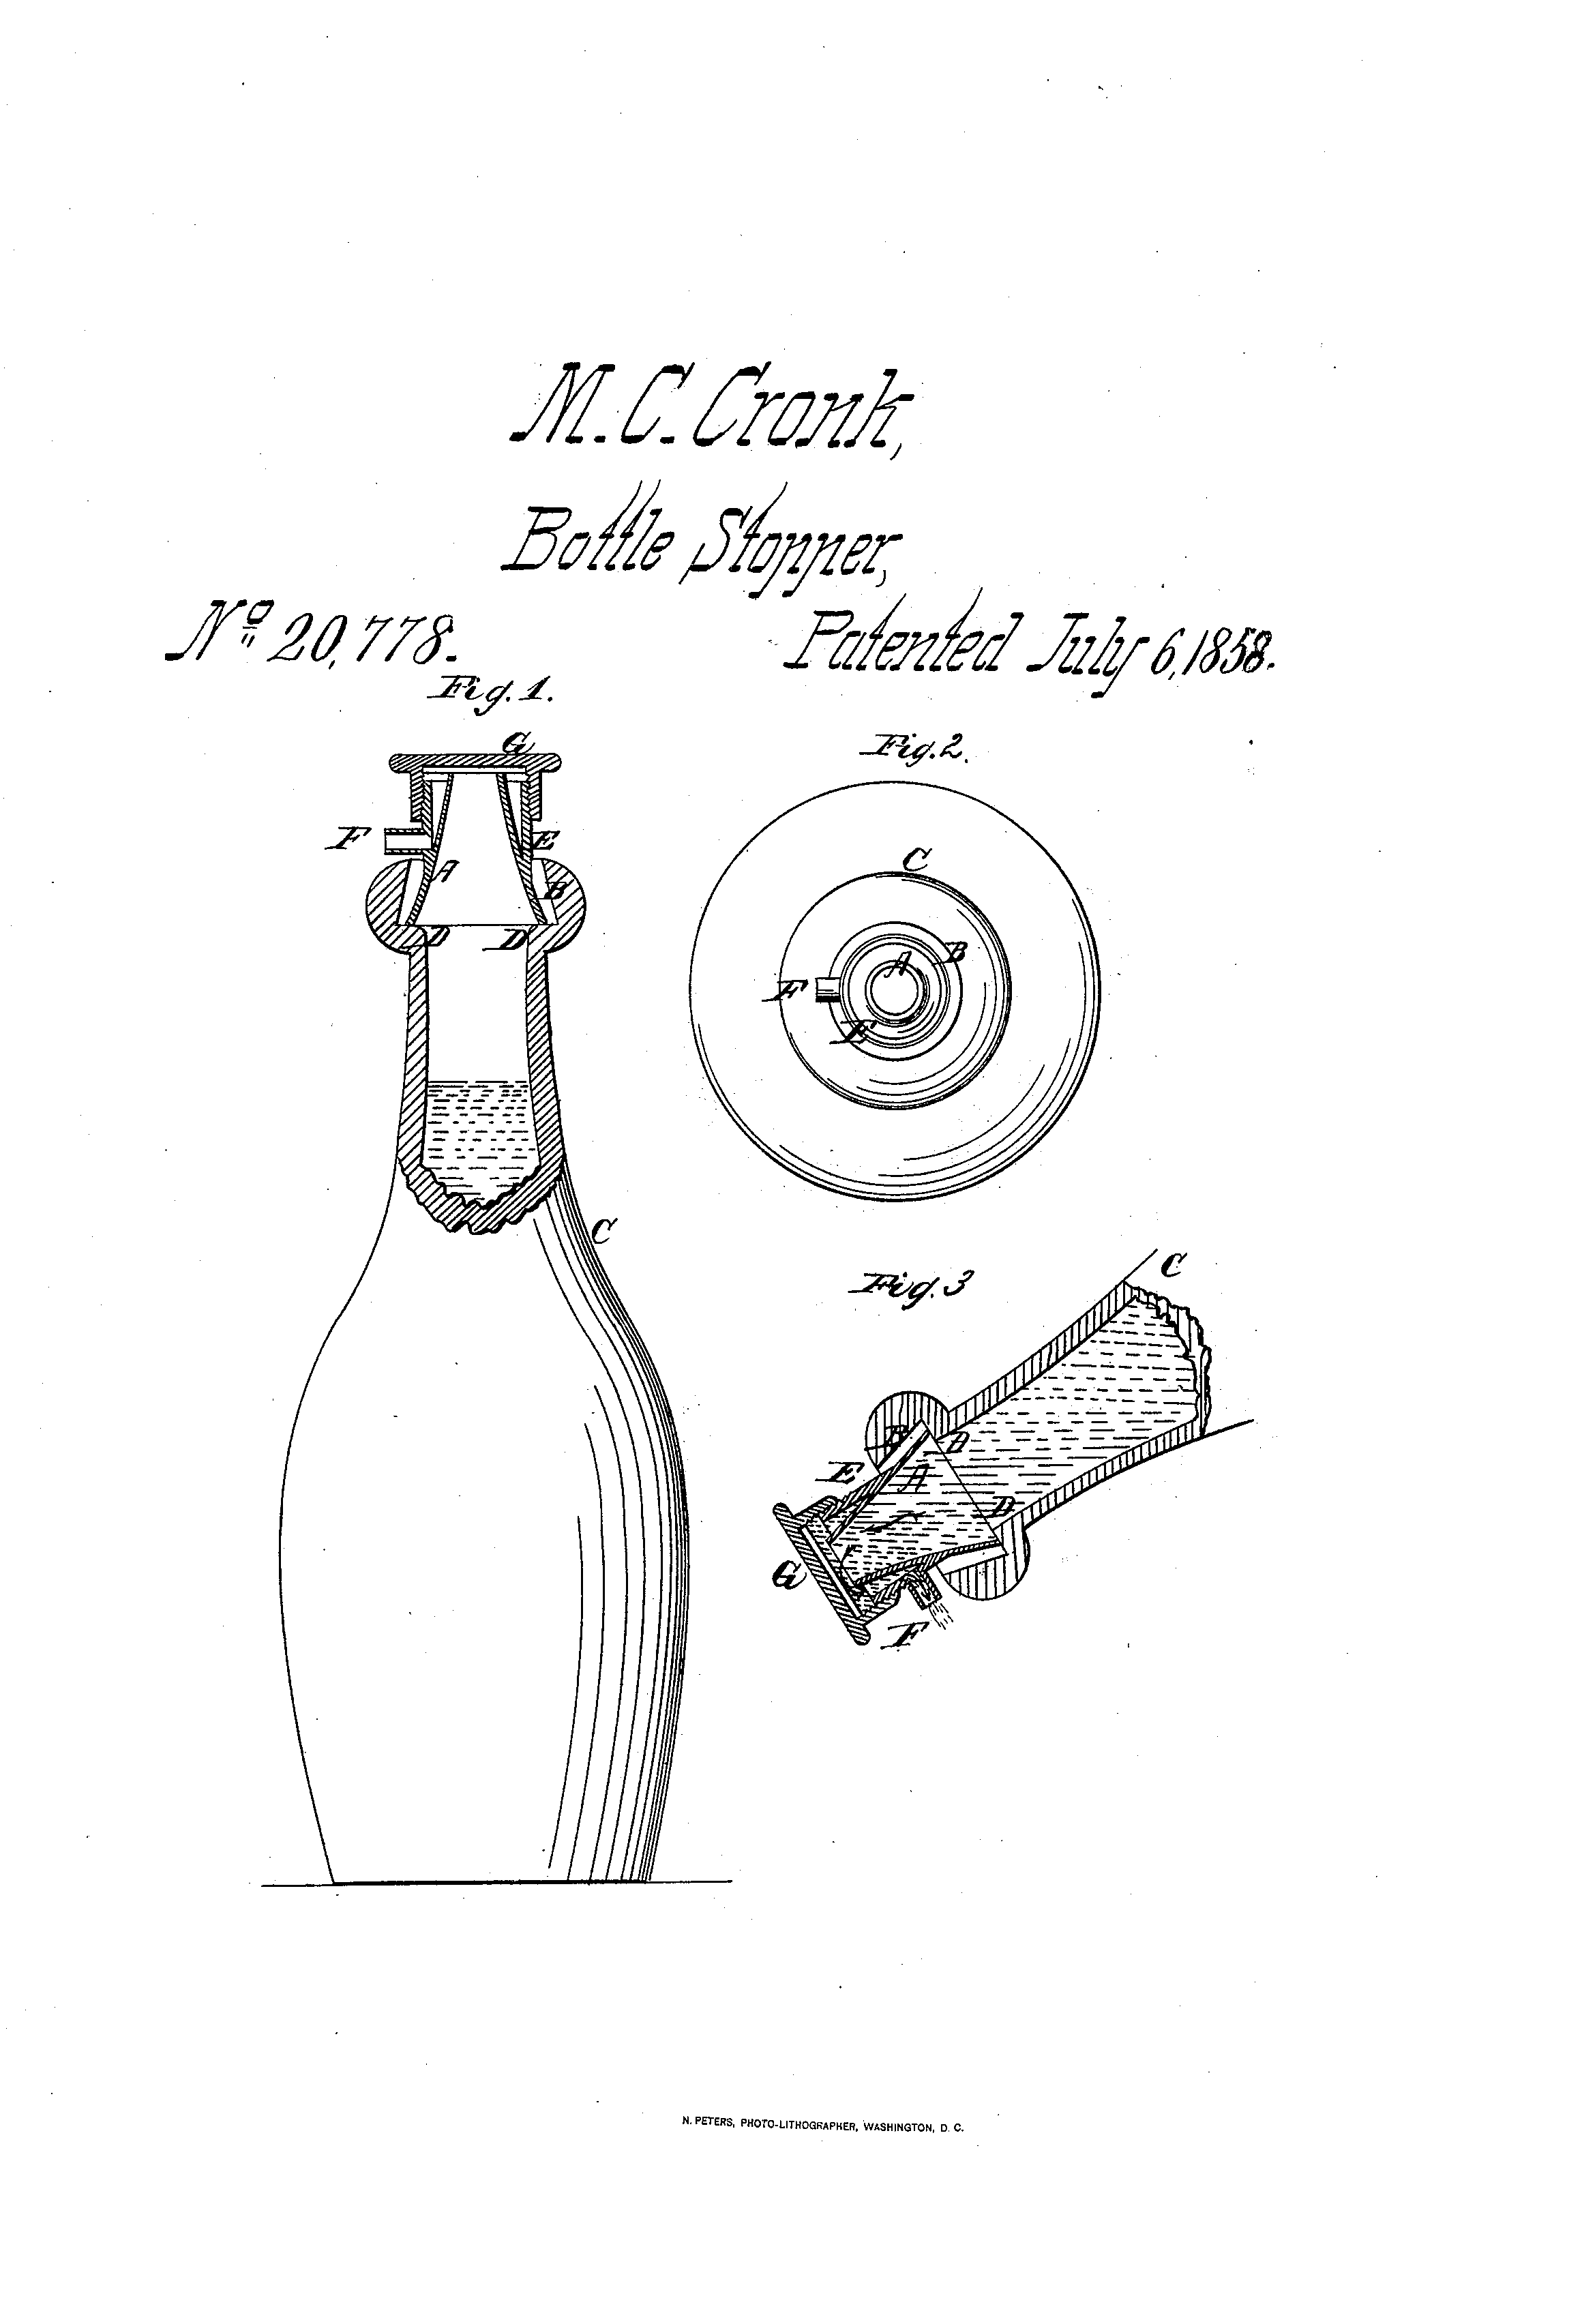 Patent 20,778